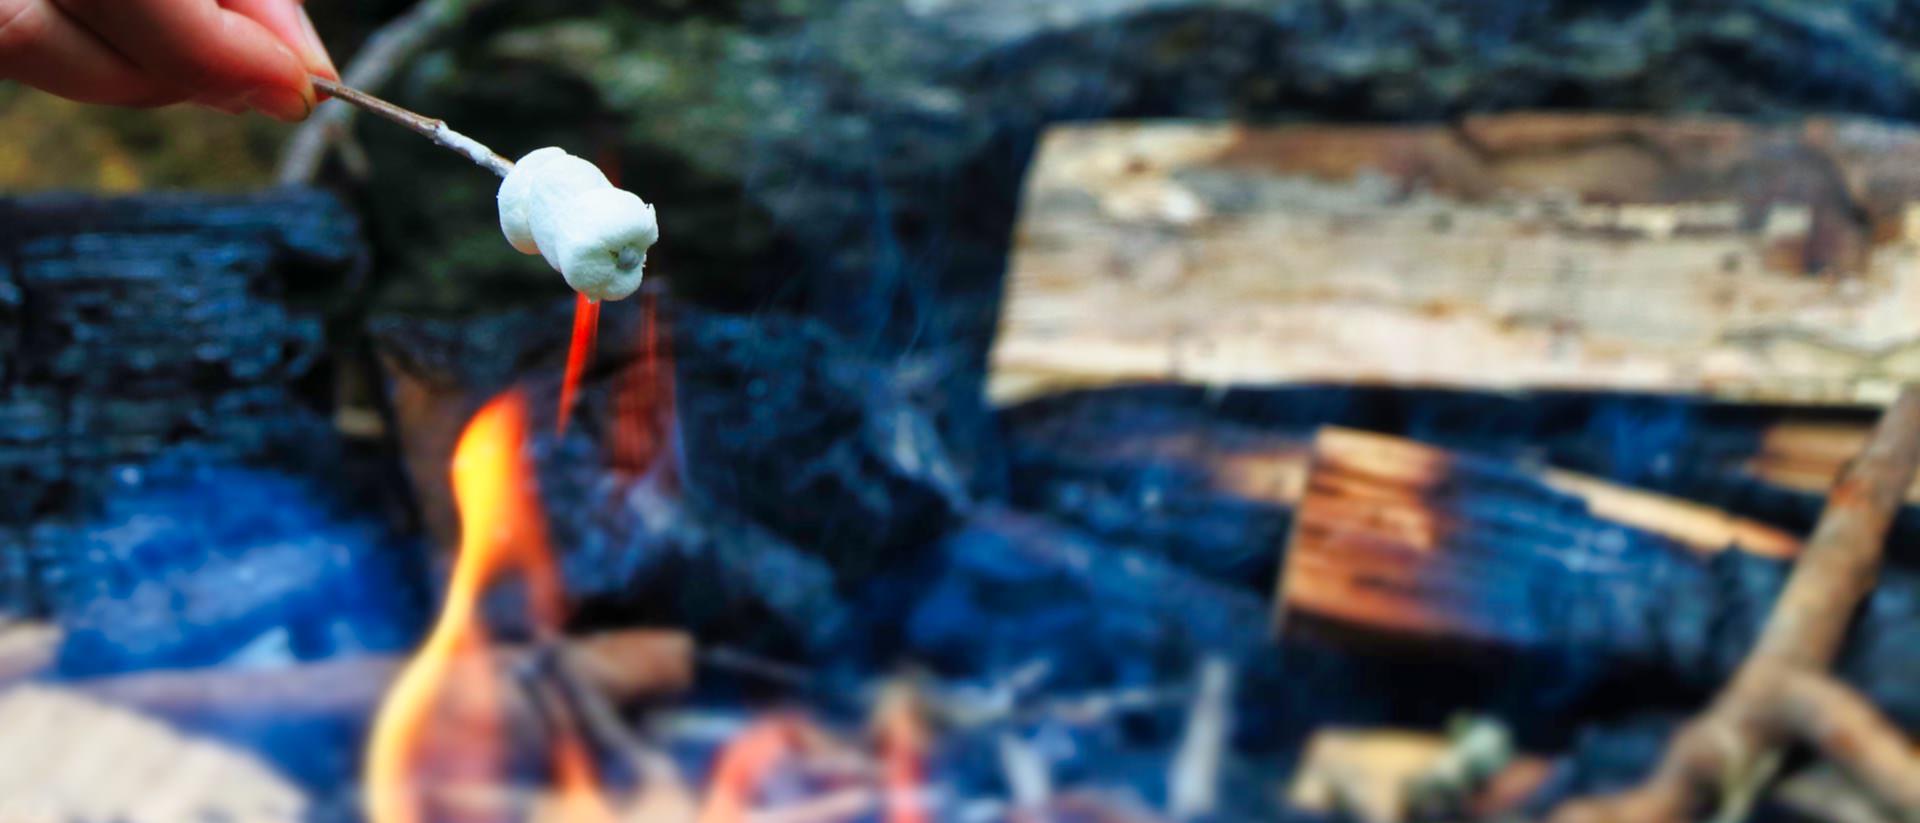 making smores over a campfire